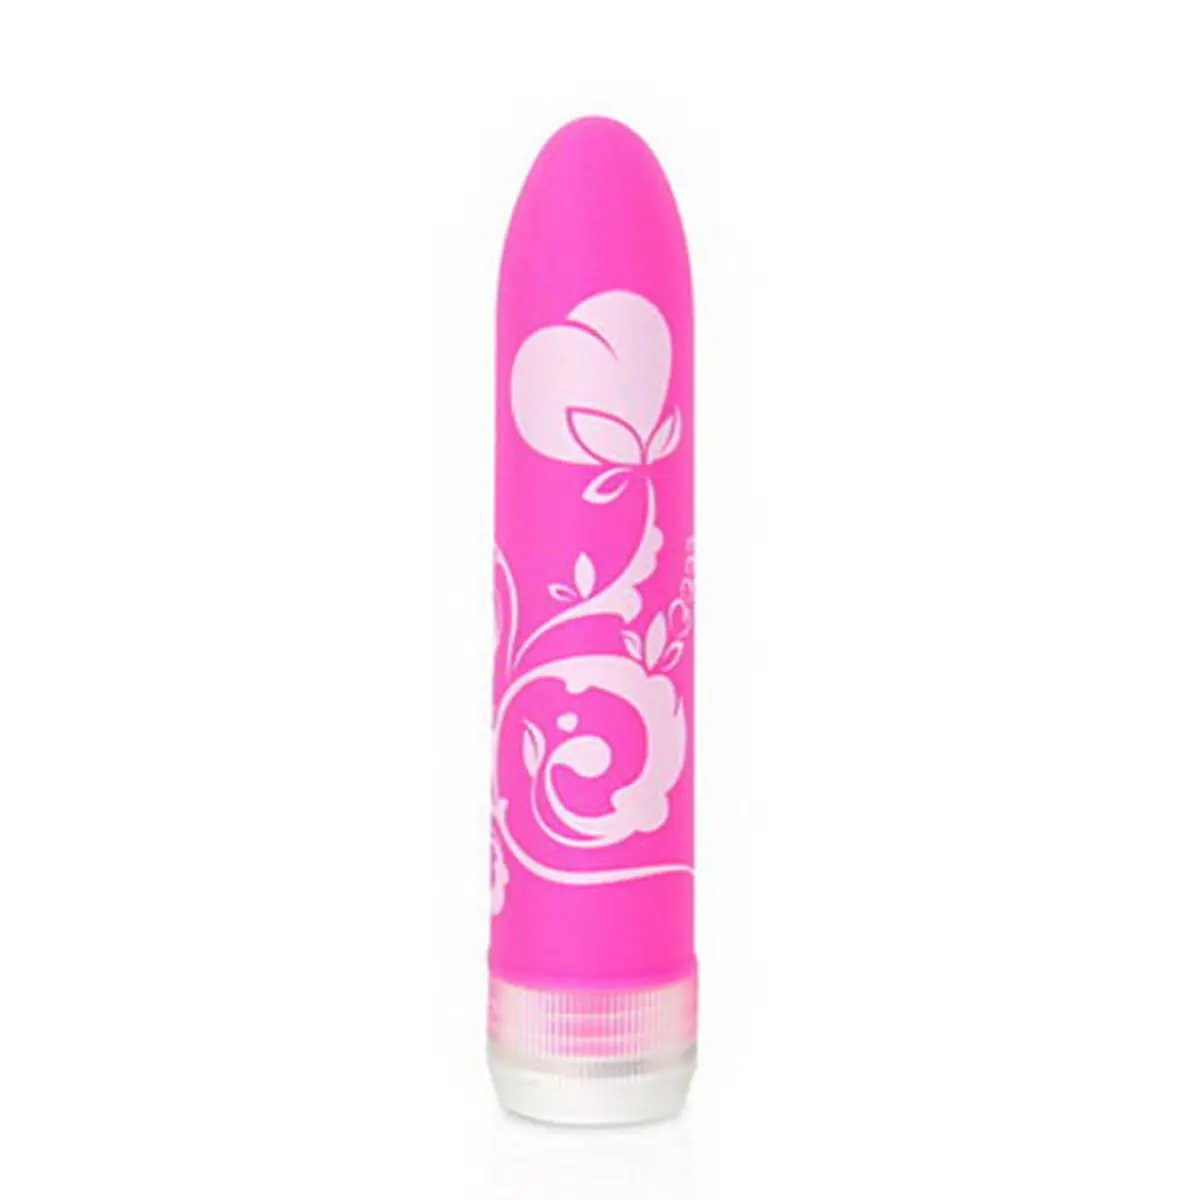 Mali roze vibrator